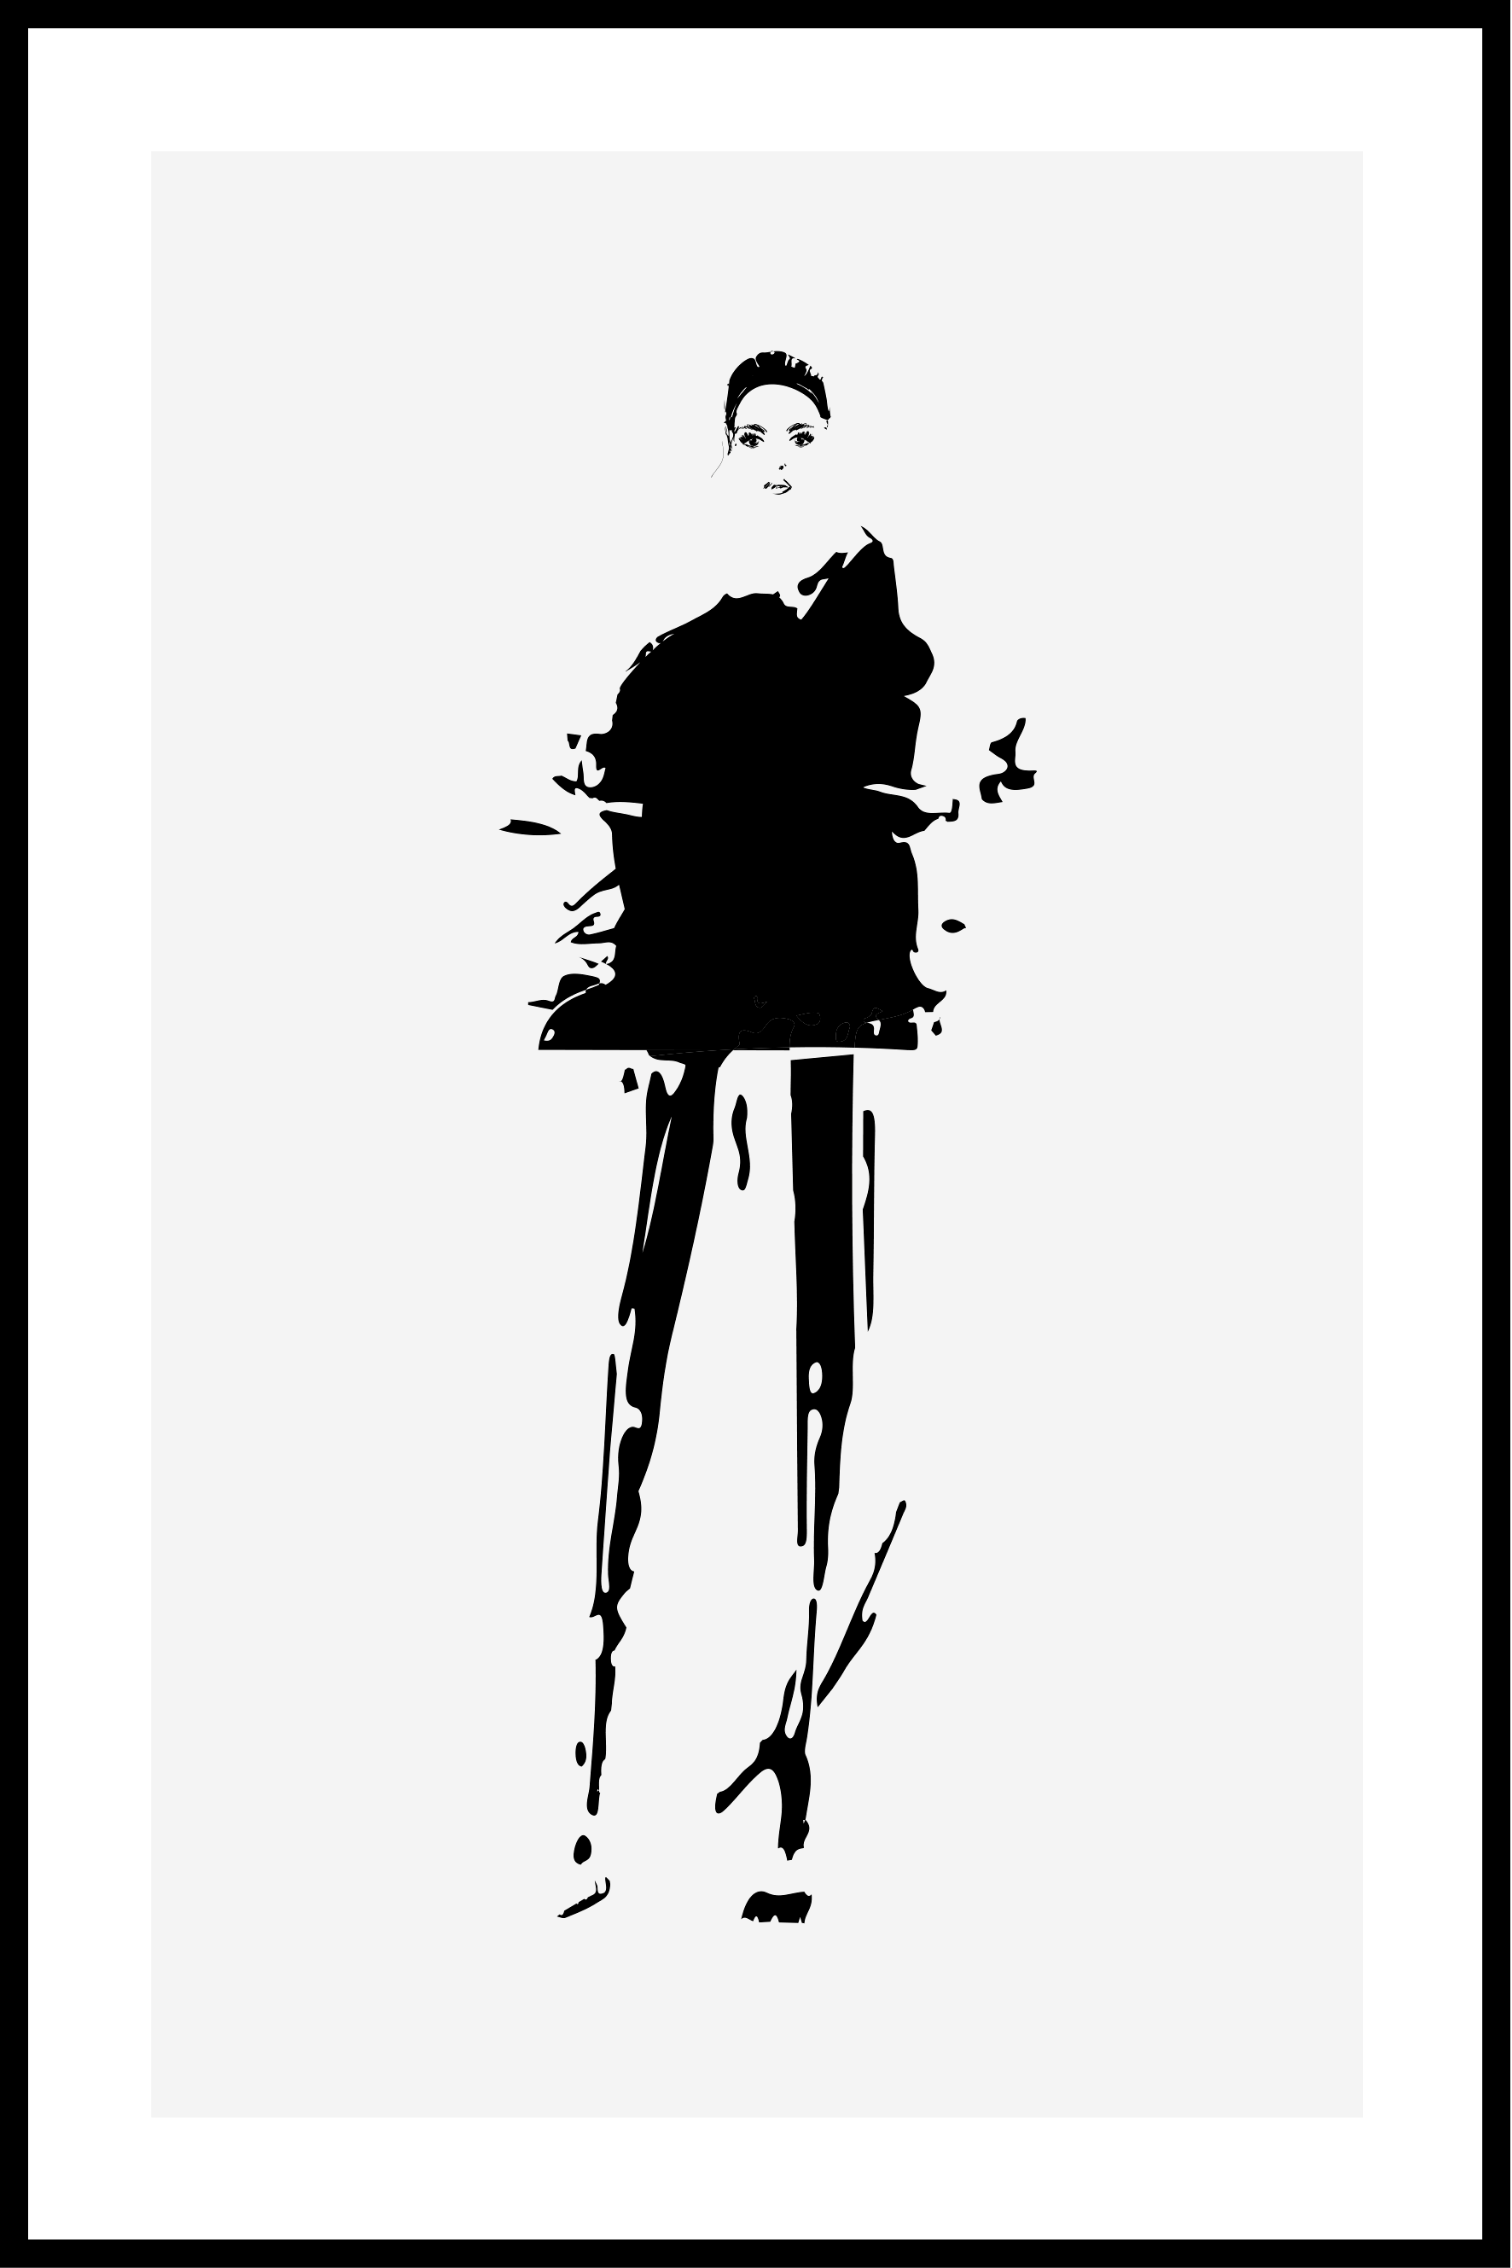 Abstrakt stående kvinna affisch